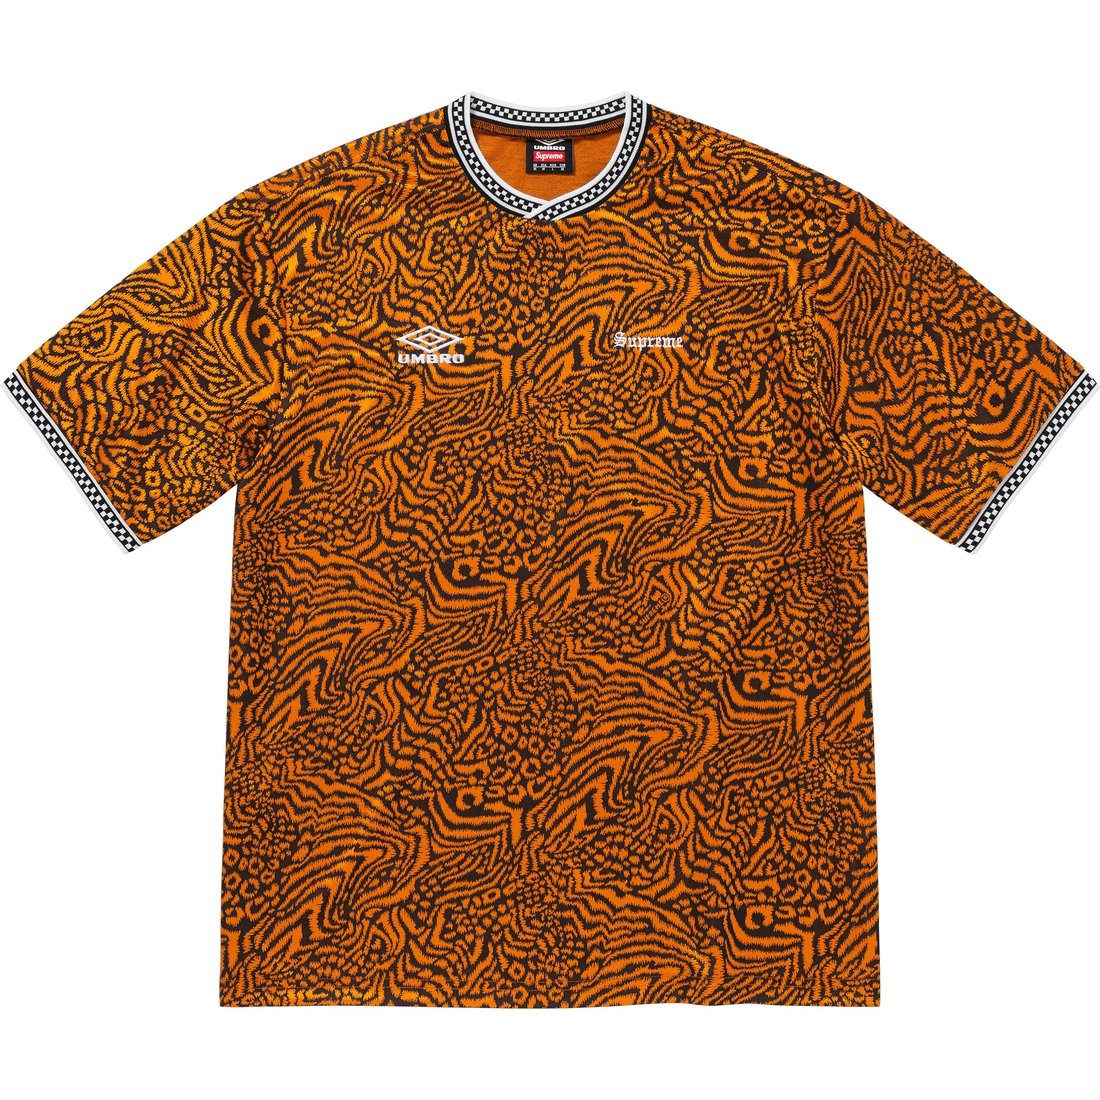 Details on Supreme Umbro Jacquard Animal Print Soccer Jersey Orange from spring summer 2023 (Price is $98)